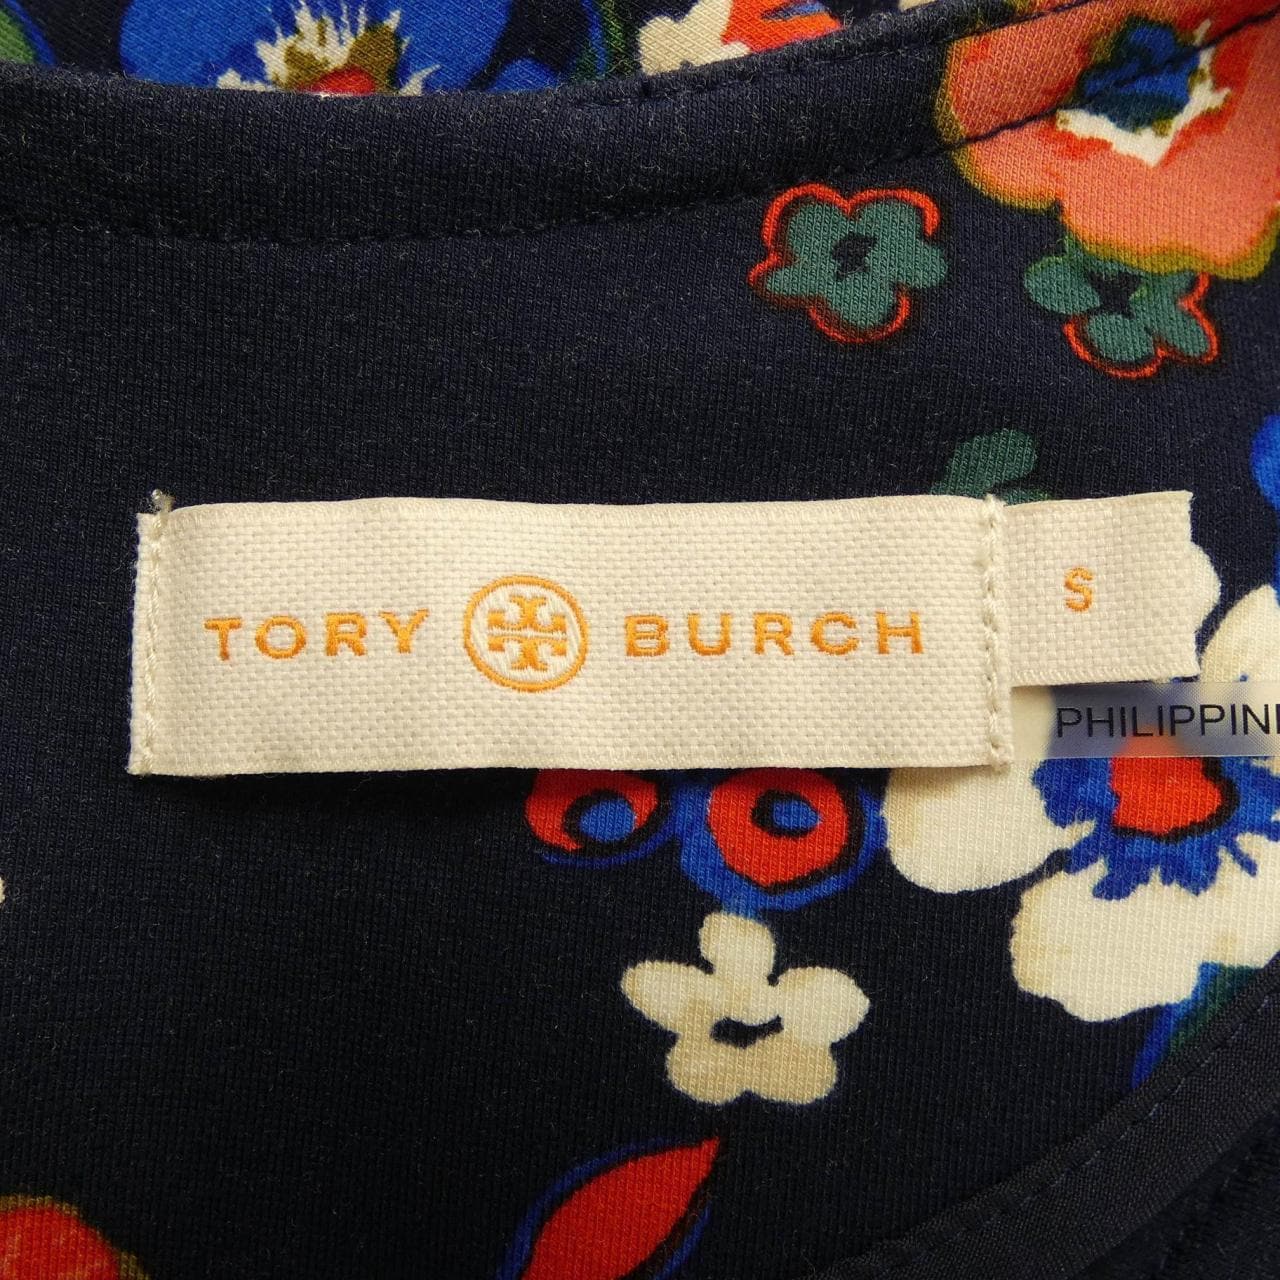 TORY BURCH (Tory Burch) 连衣裙